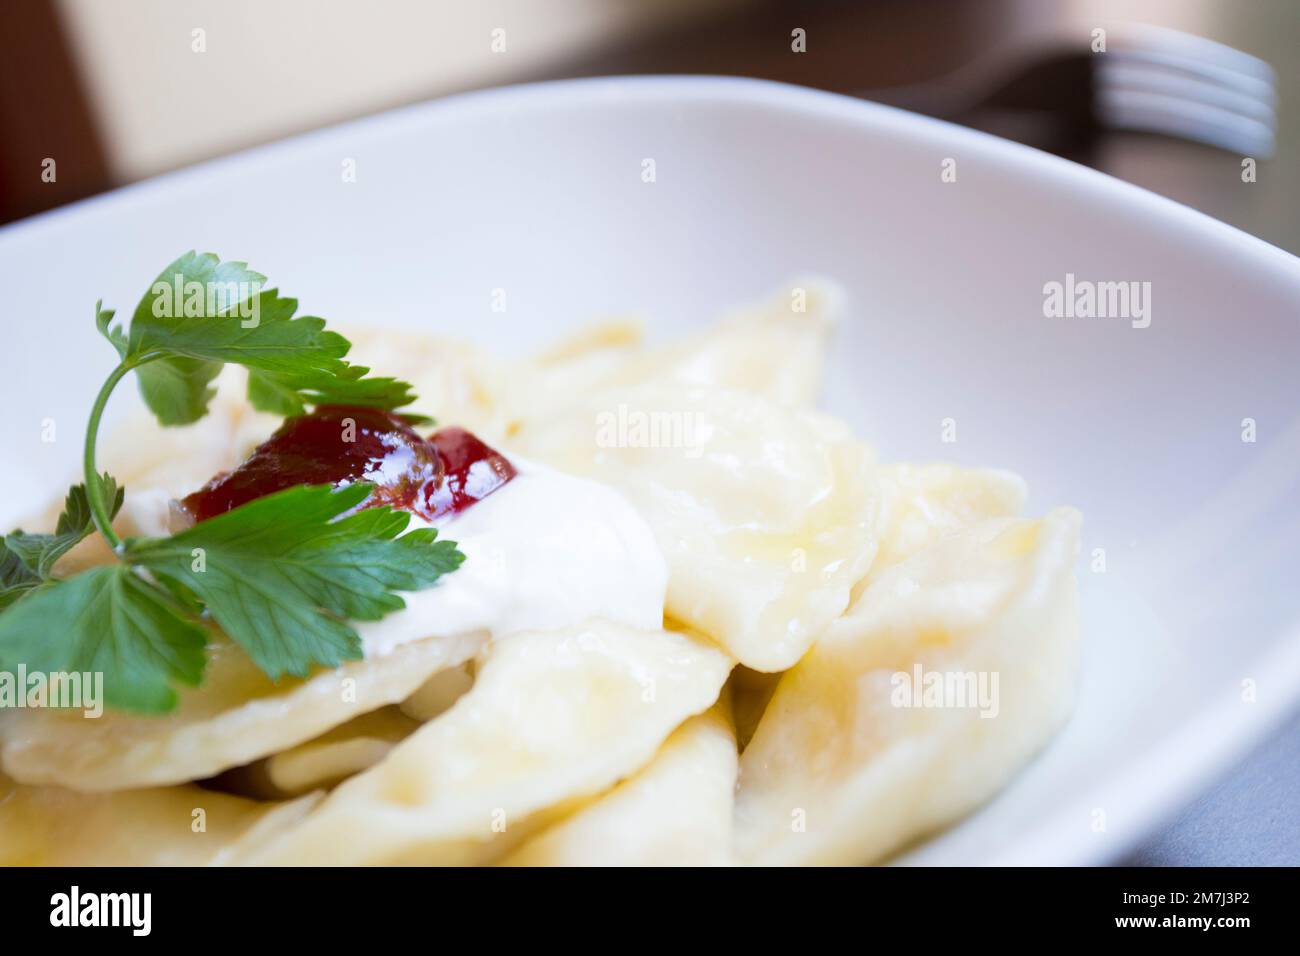 Pelmeni is a traditional Eastern European dish. Stock Photo